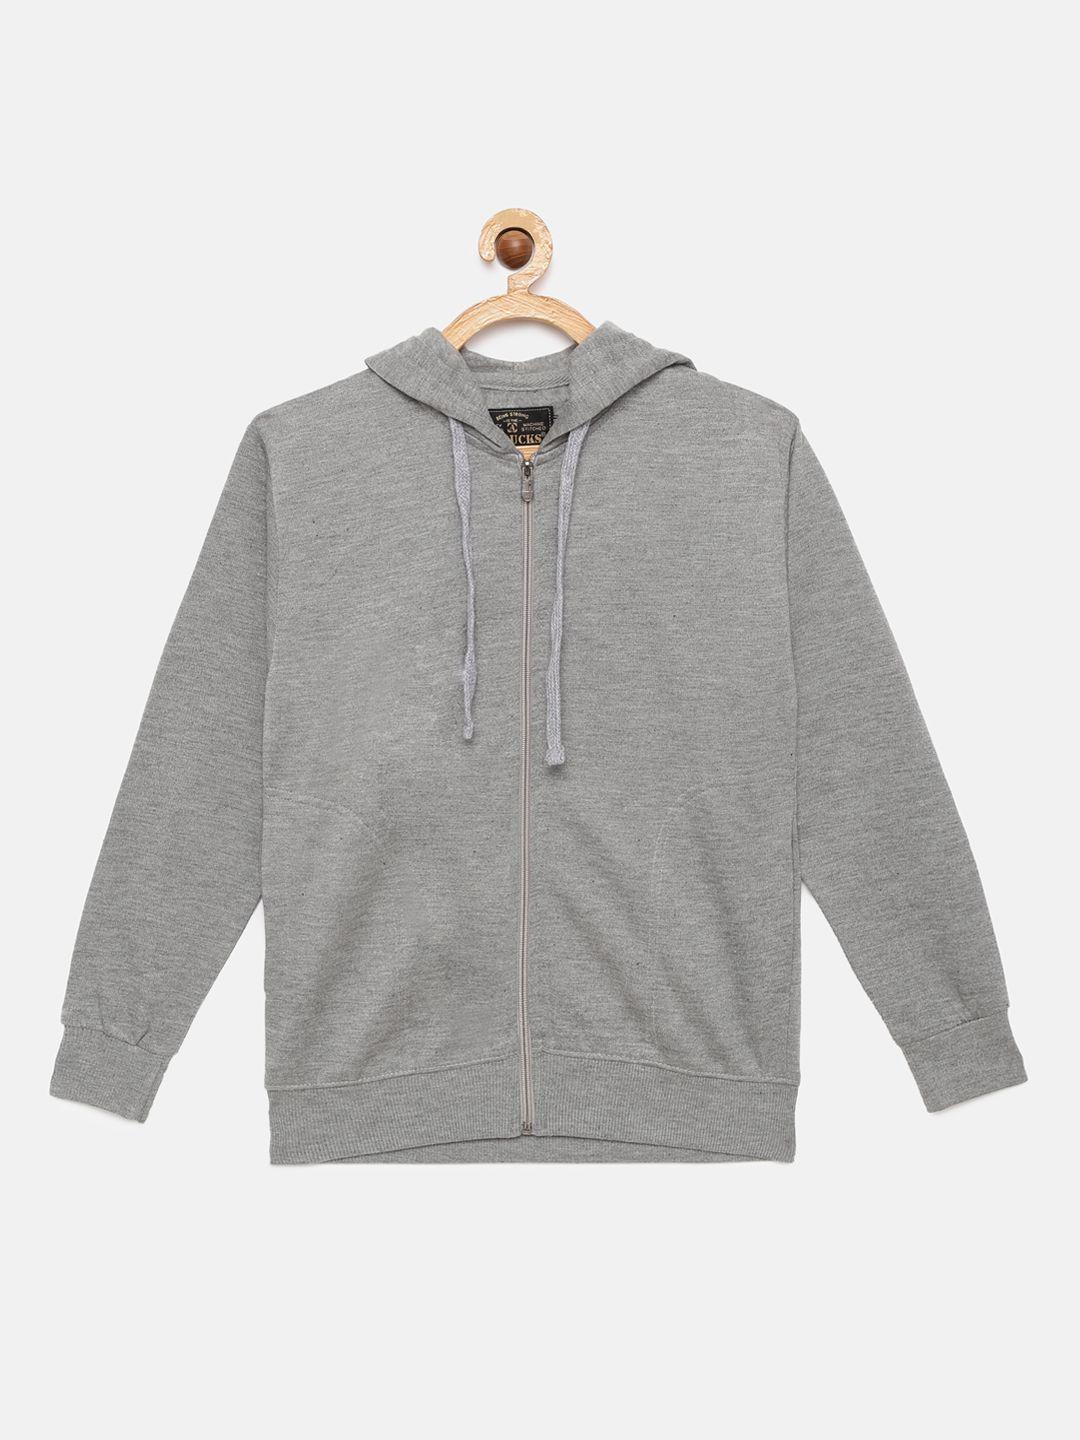 adbucks boys grey solid pure cotton hooded sweatshirt